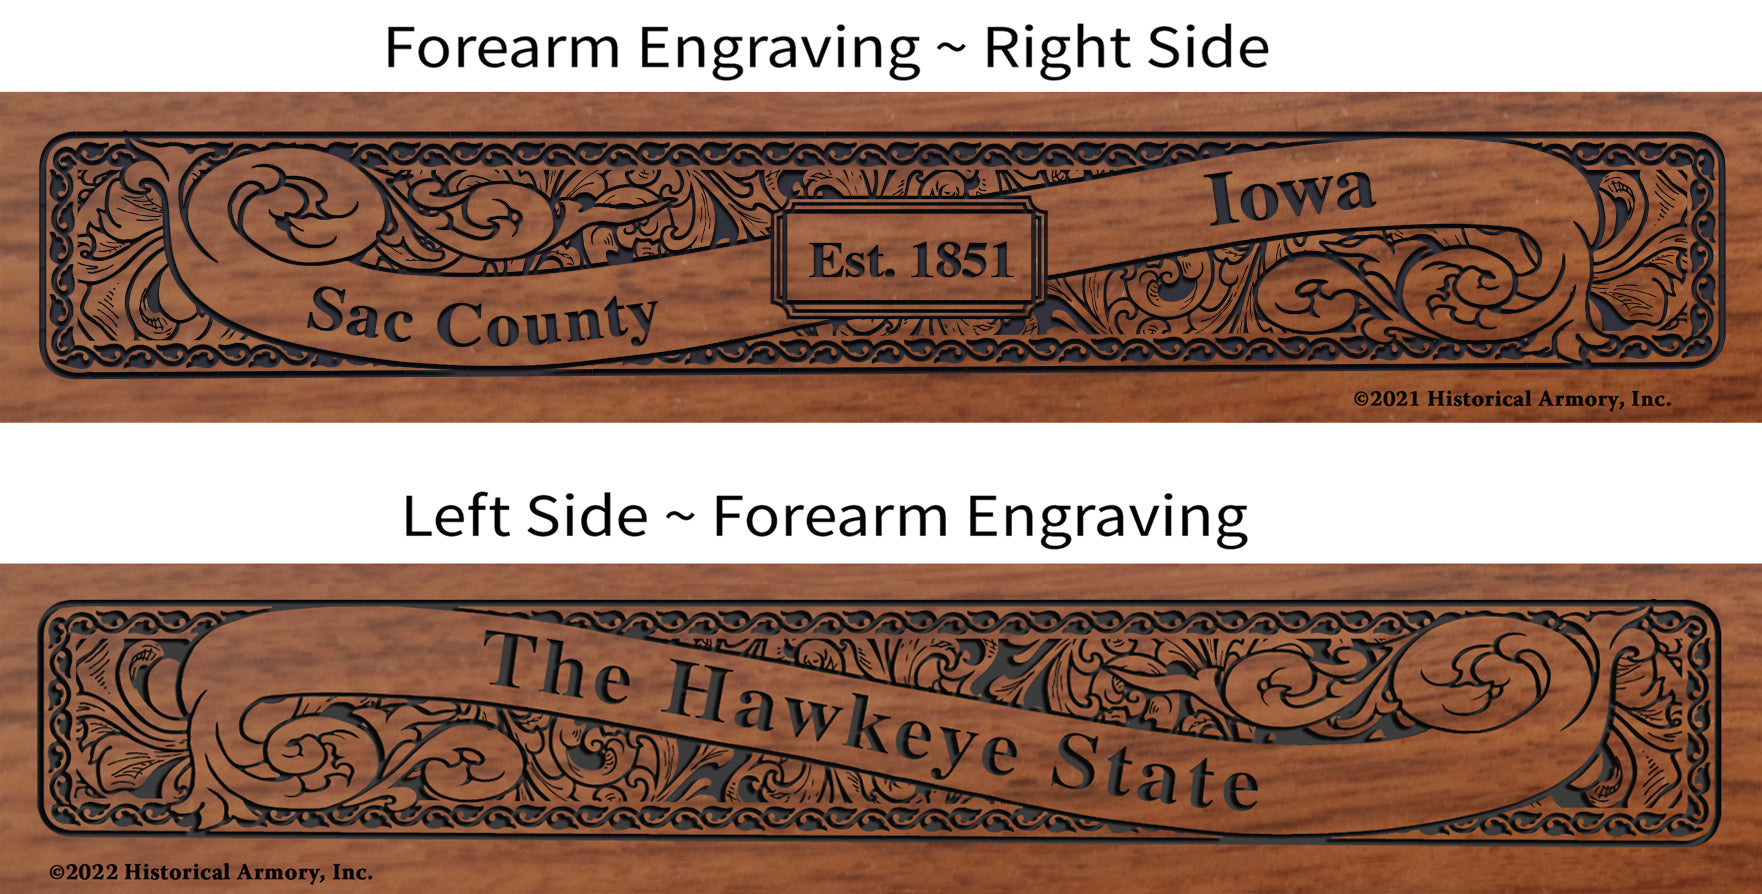 Sac County Iowa Engraved Rifle Forearm